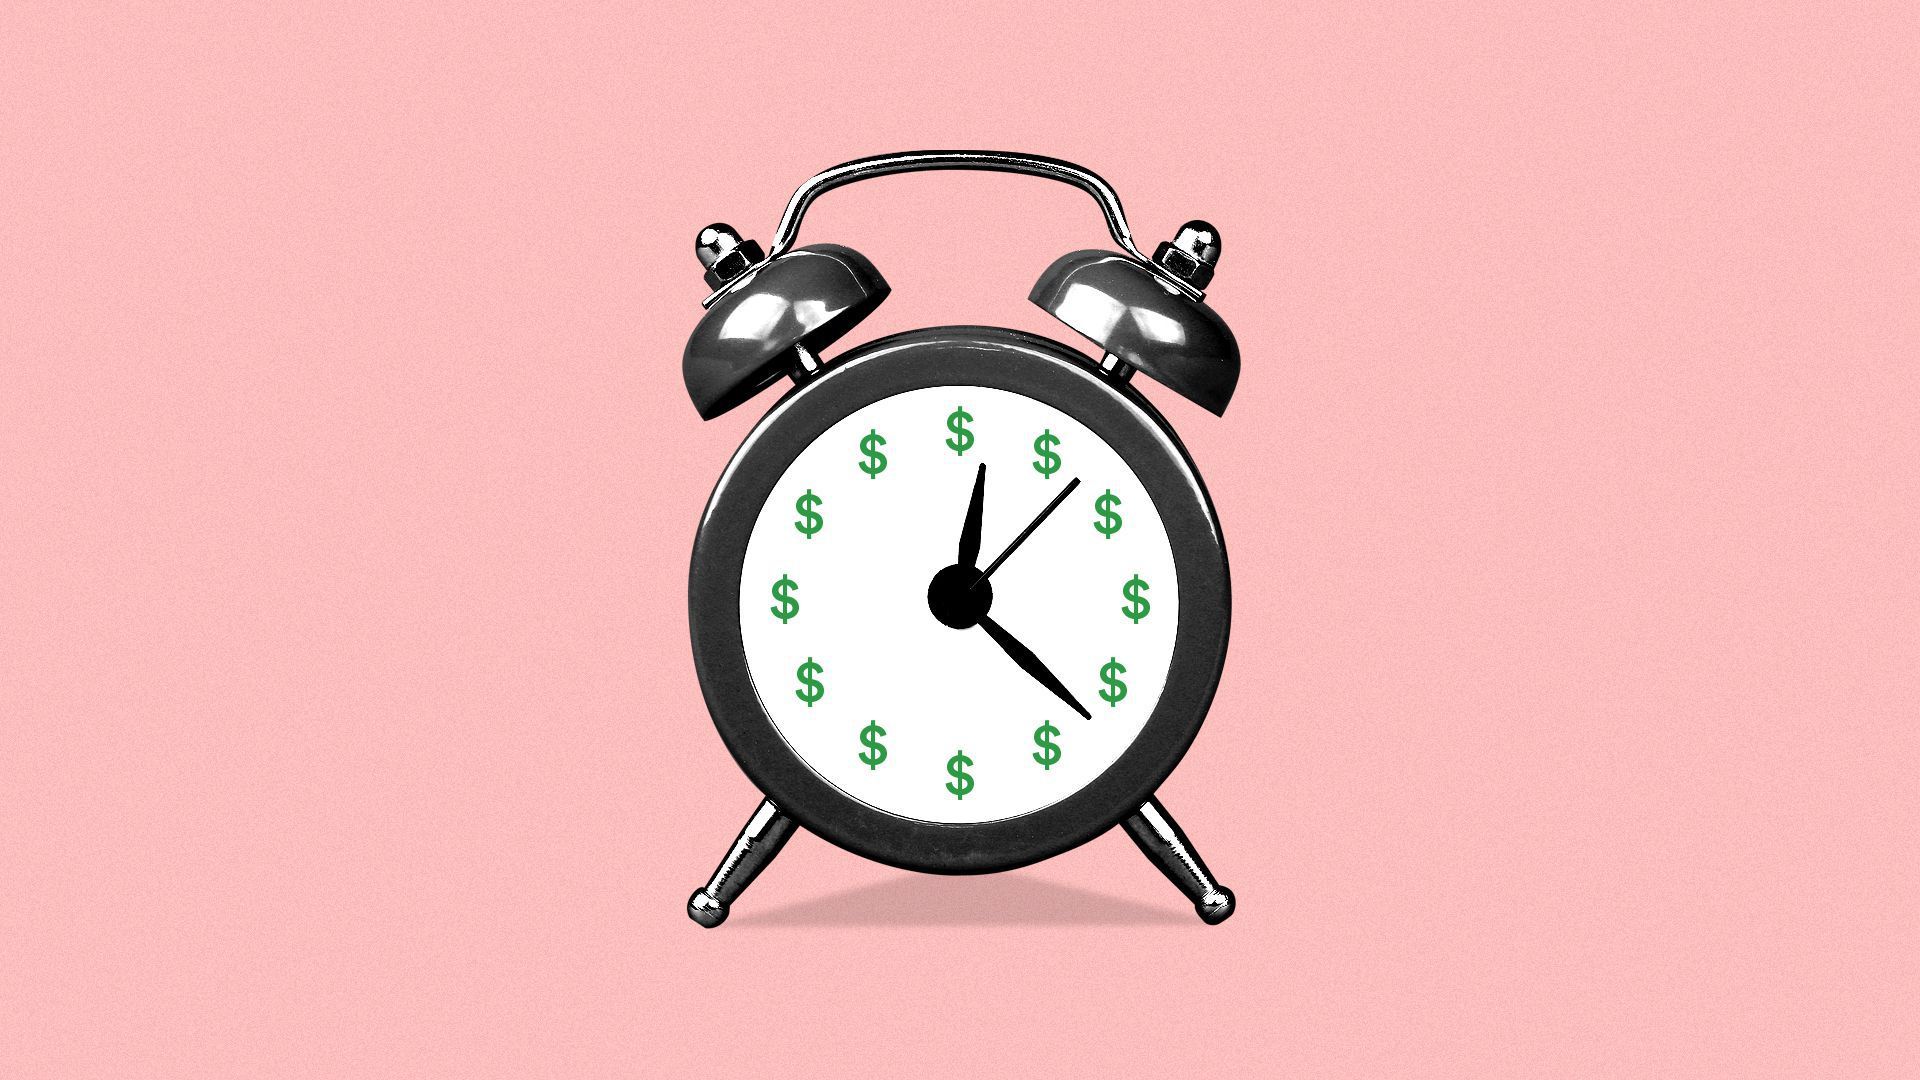 Illustration of a money alarm clock.